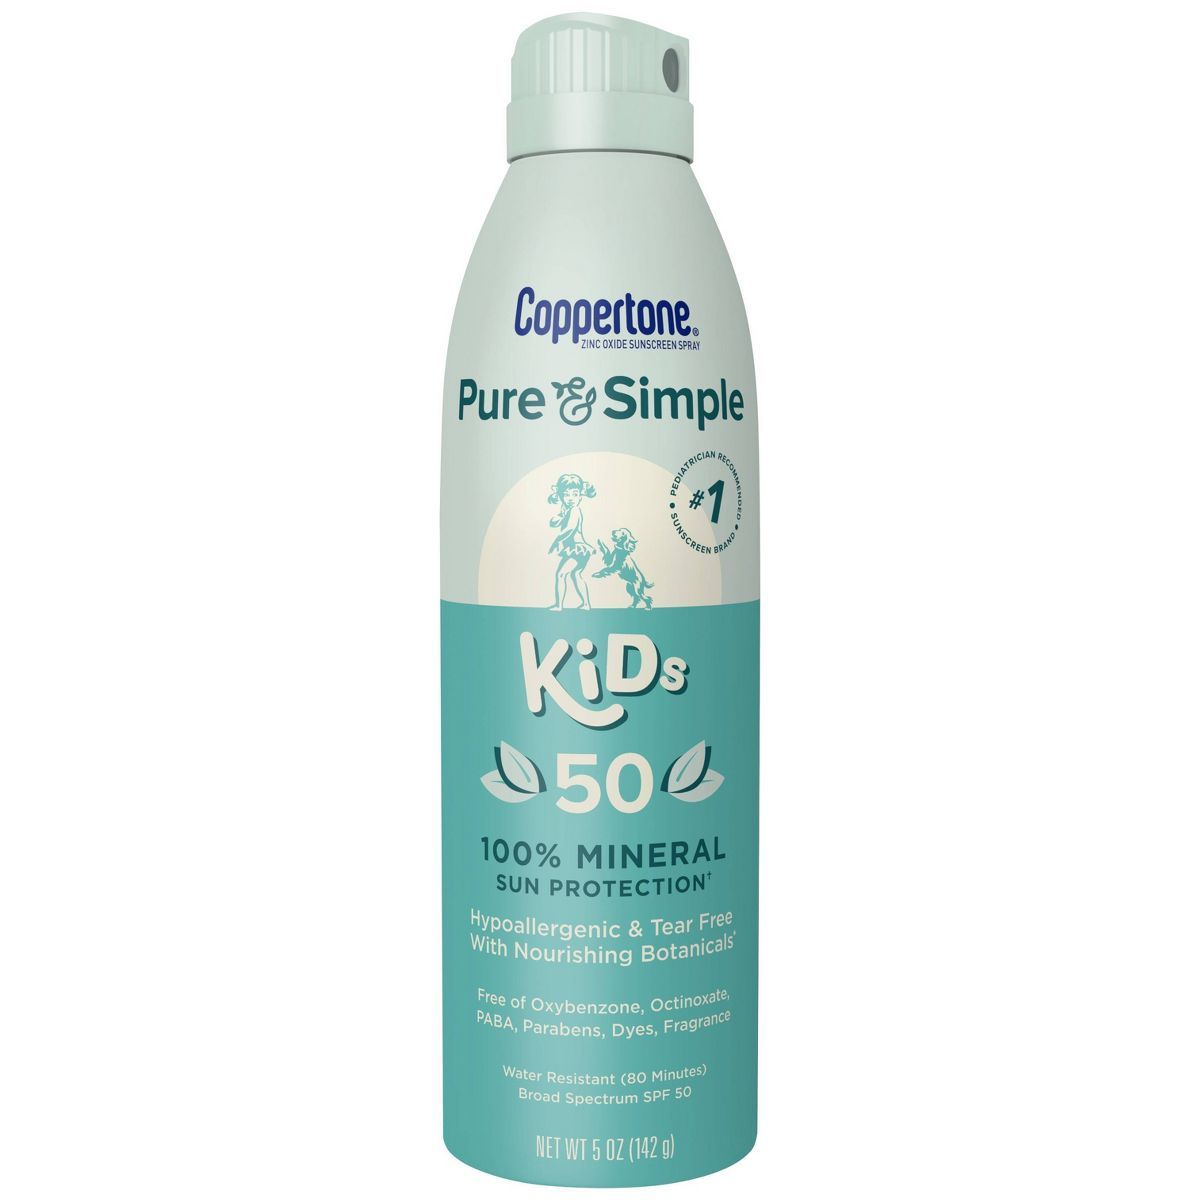 Coppertone Pure & Simple Kid's Sunscreen Spray - SPF 50 - 5oz | Target